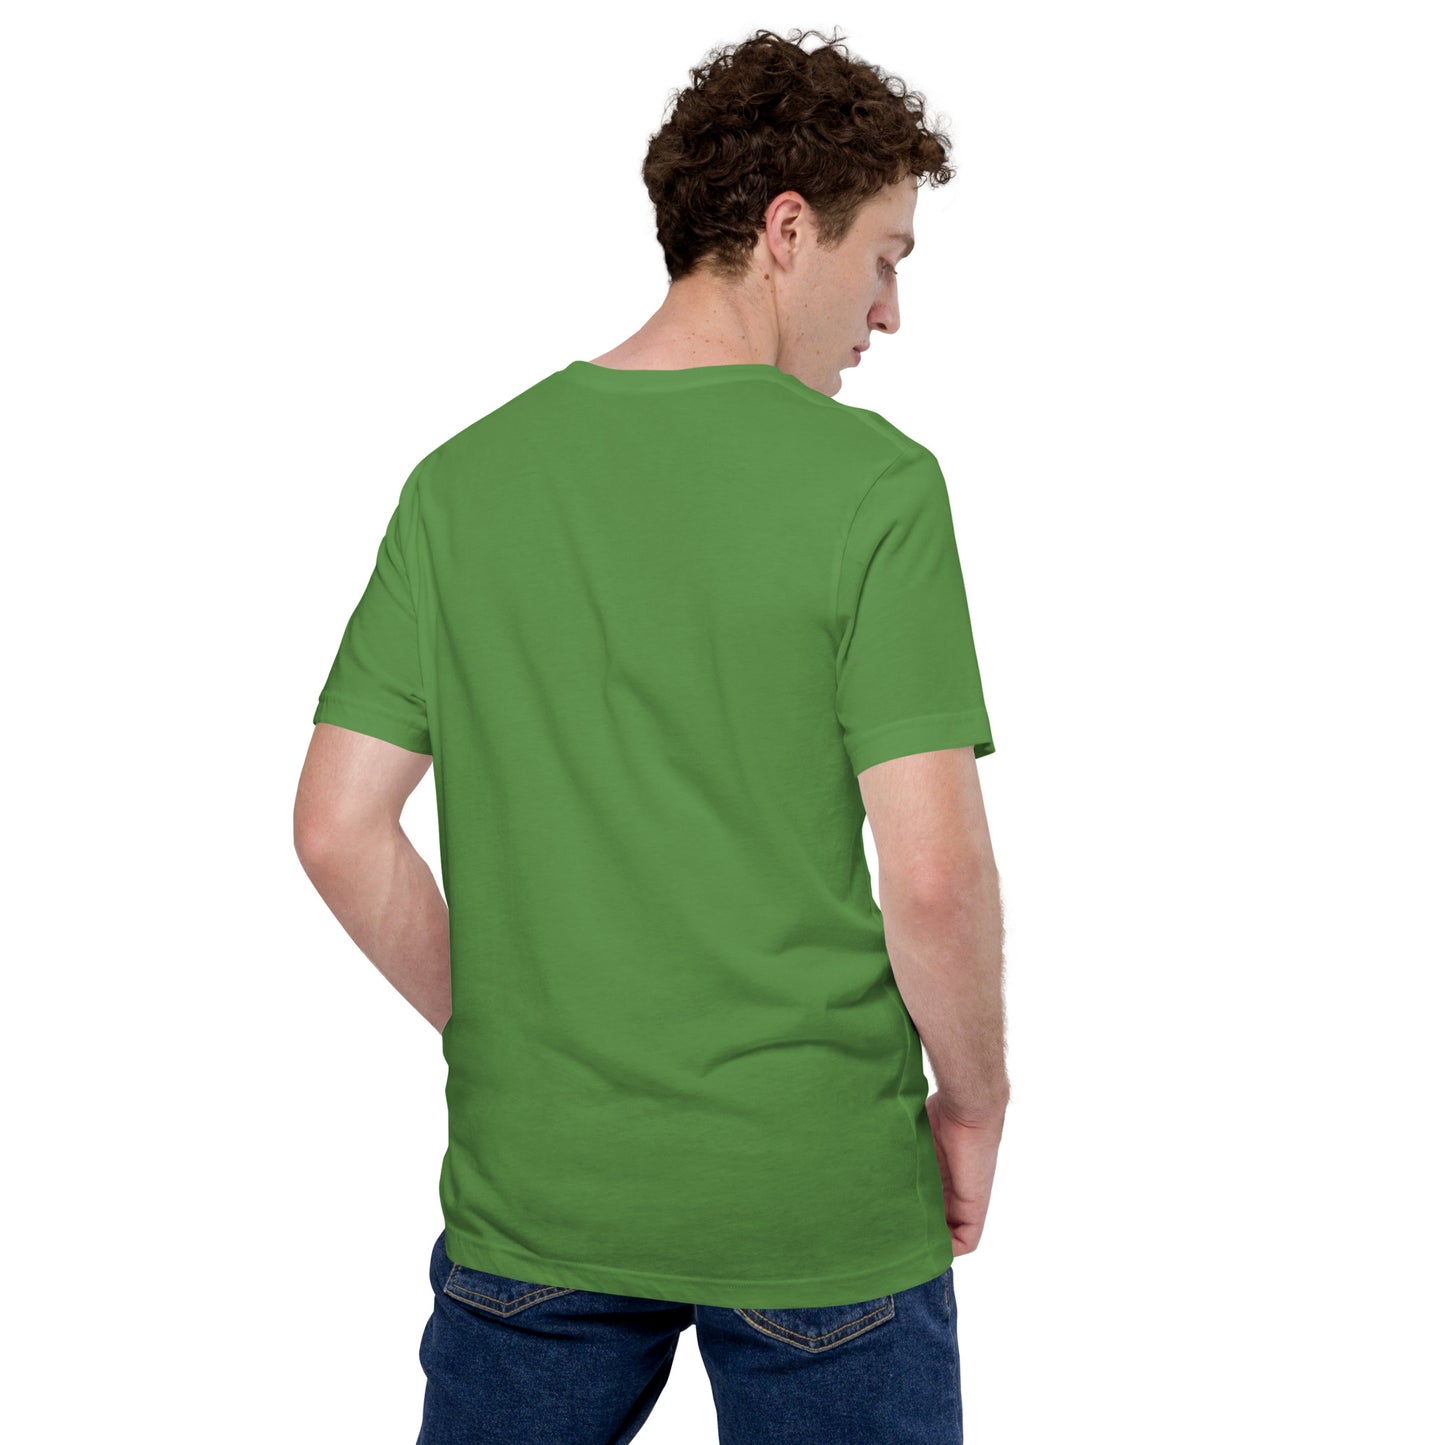 Happy St. Patrick's Day Unisex Shirt